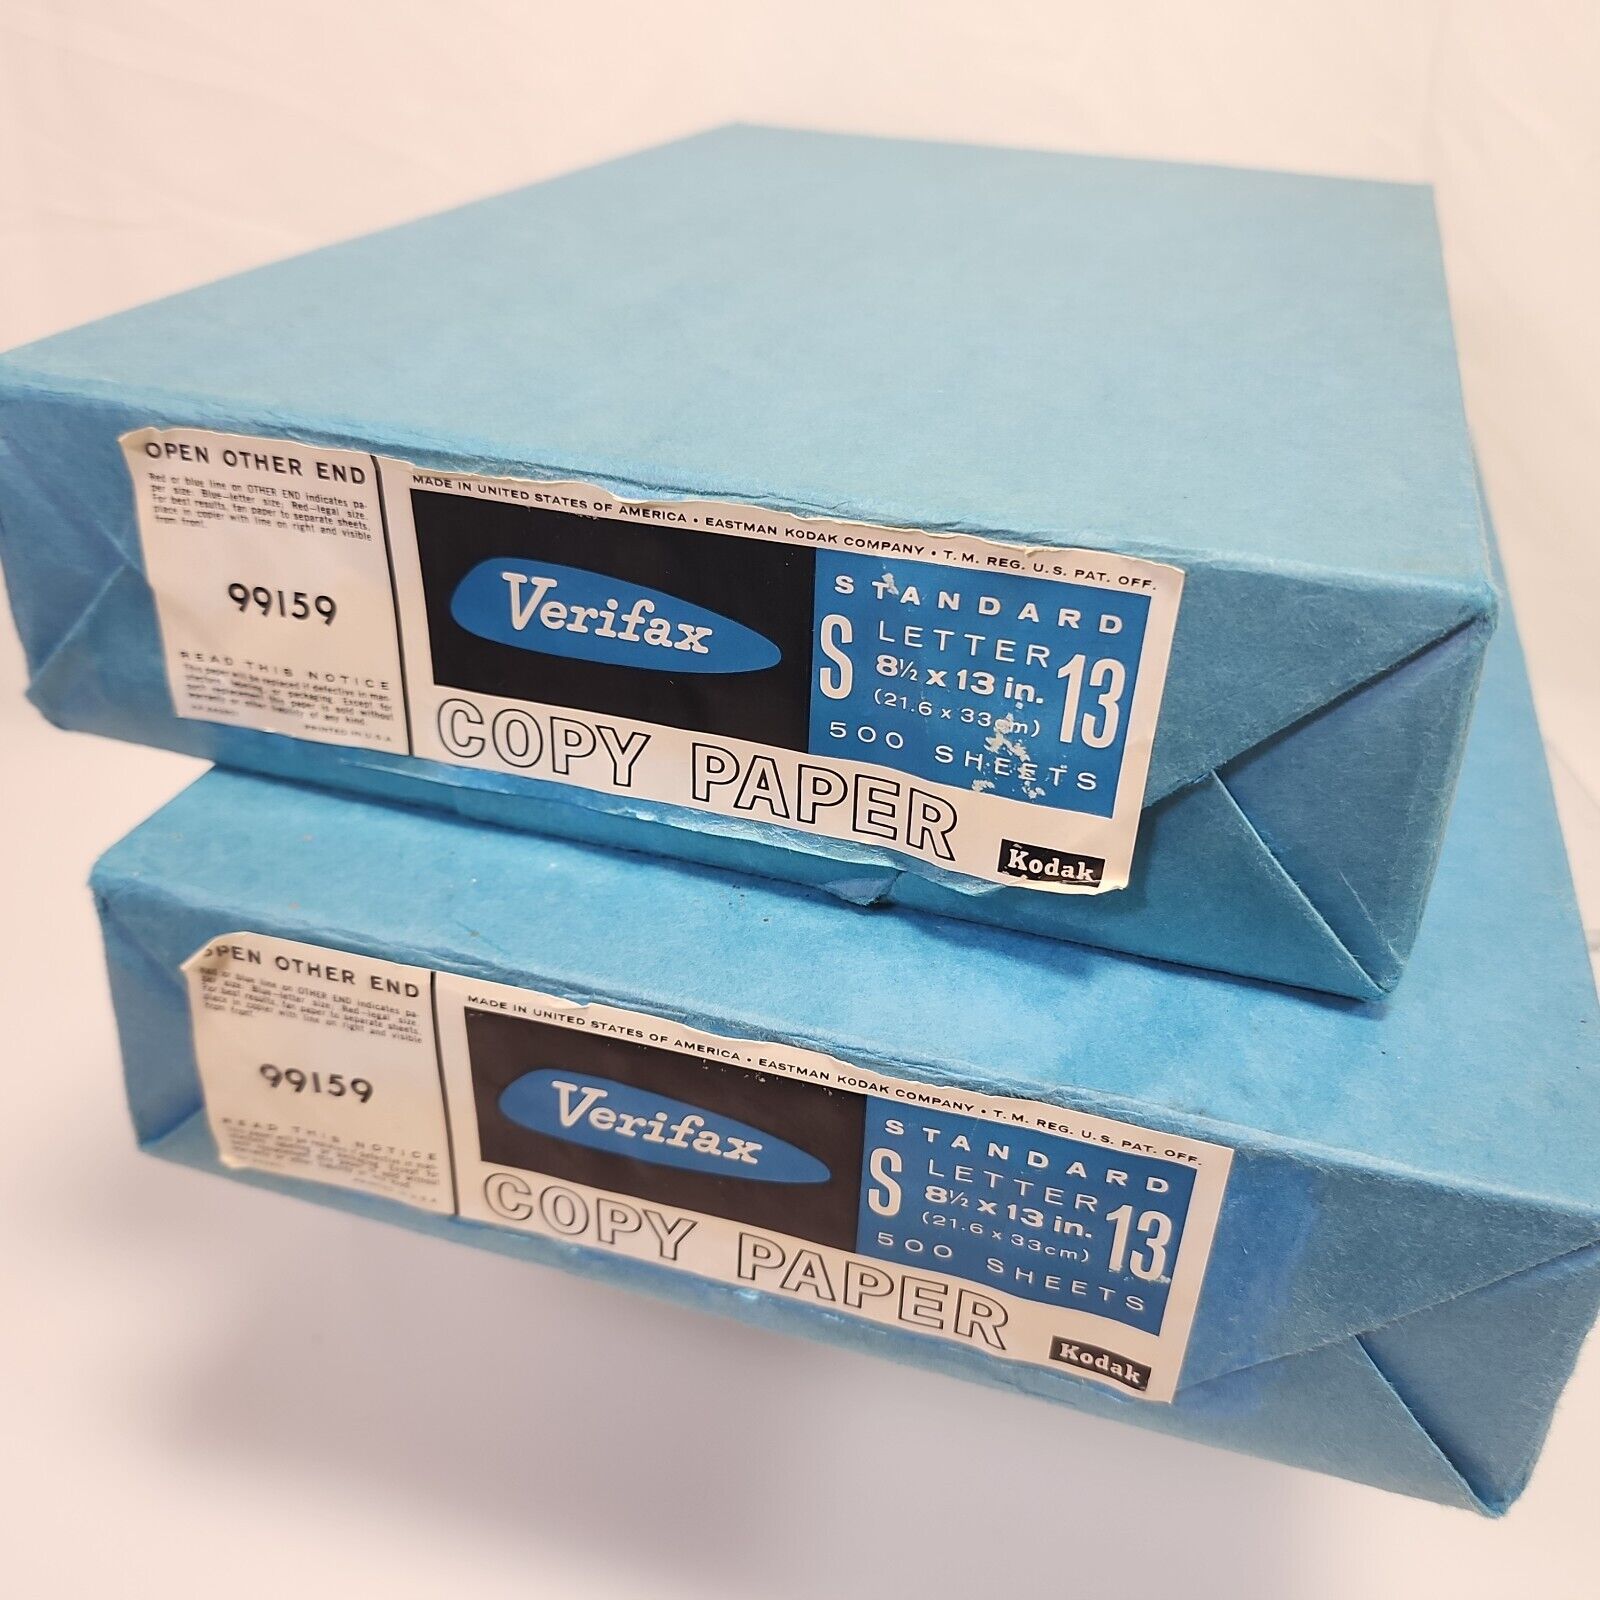 Vtg Sealed Kodak Verifax Copy Paper 2 x 500 Pack Sheets 8.5x13 Inches 99159